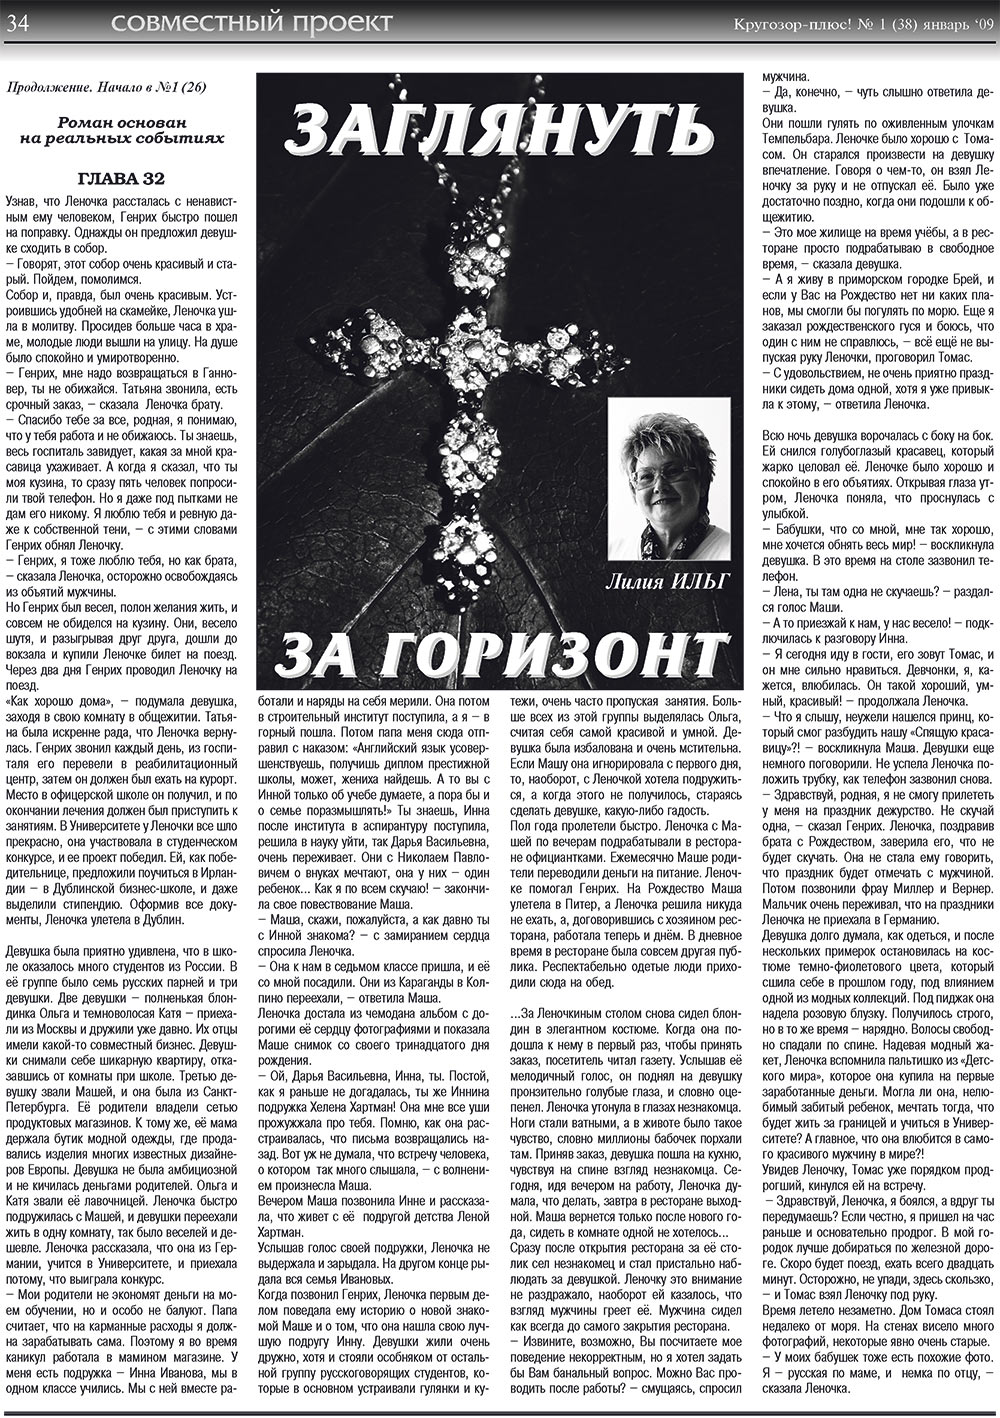 Кругозор плюс! (газета). 2009 год, номер 1, стр. 34